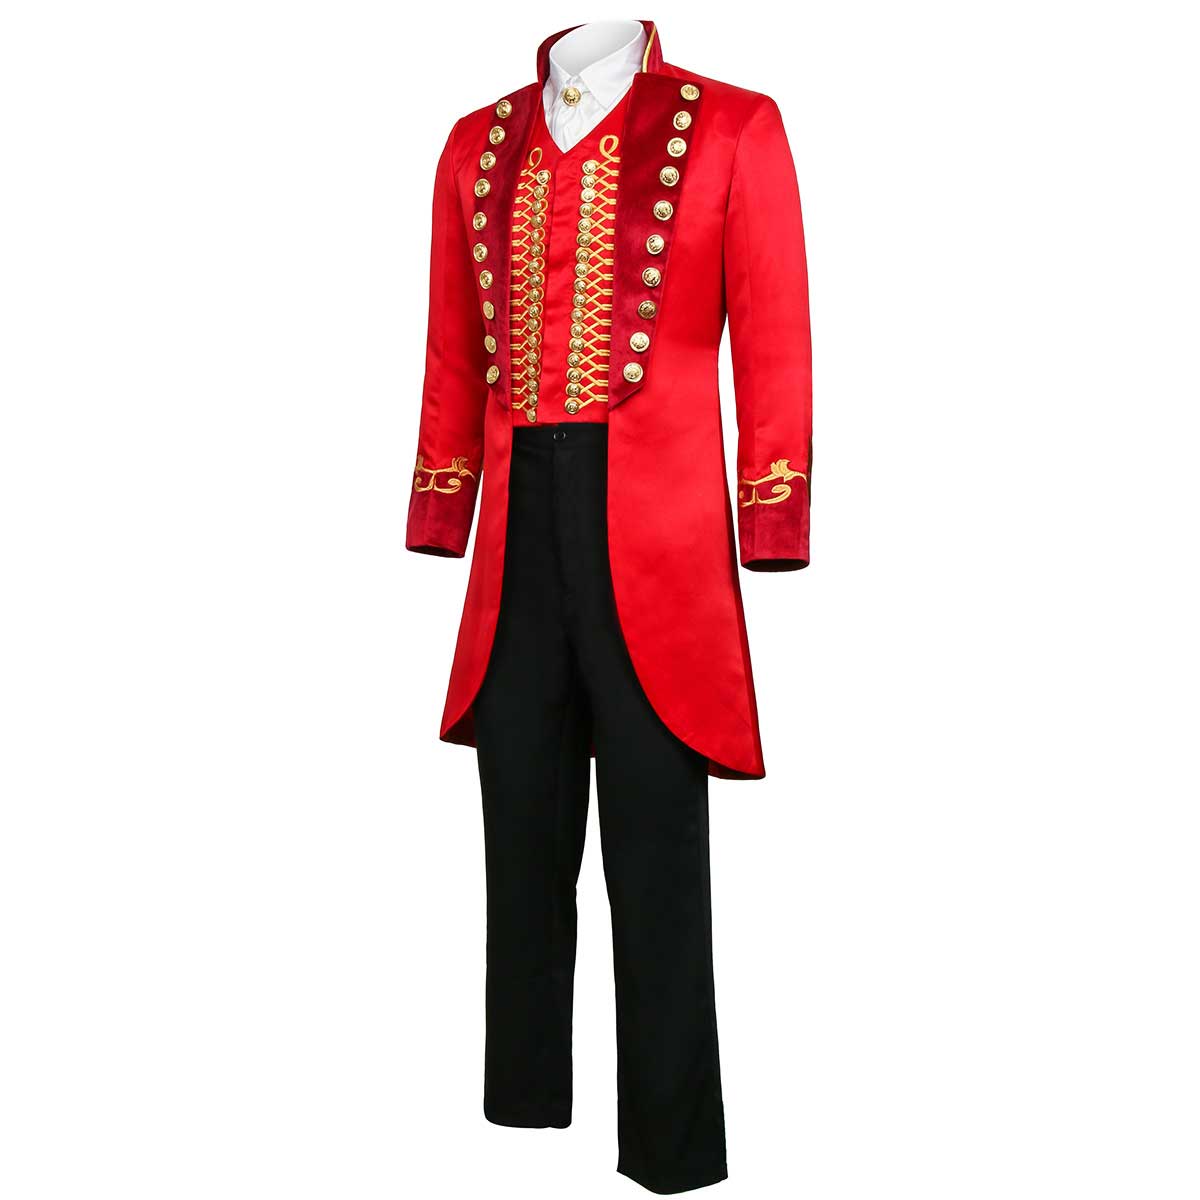 The Greatest Showman P. T. Barnum Full Set Customized Uniforms Cosplay Costume